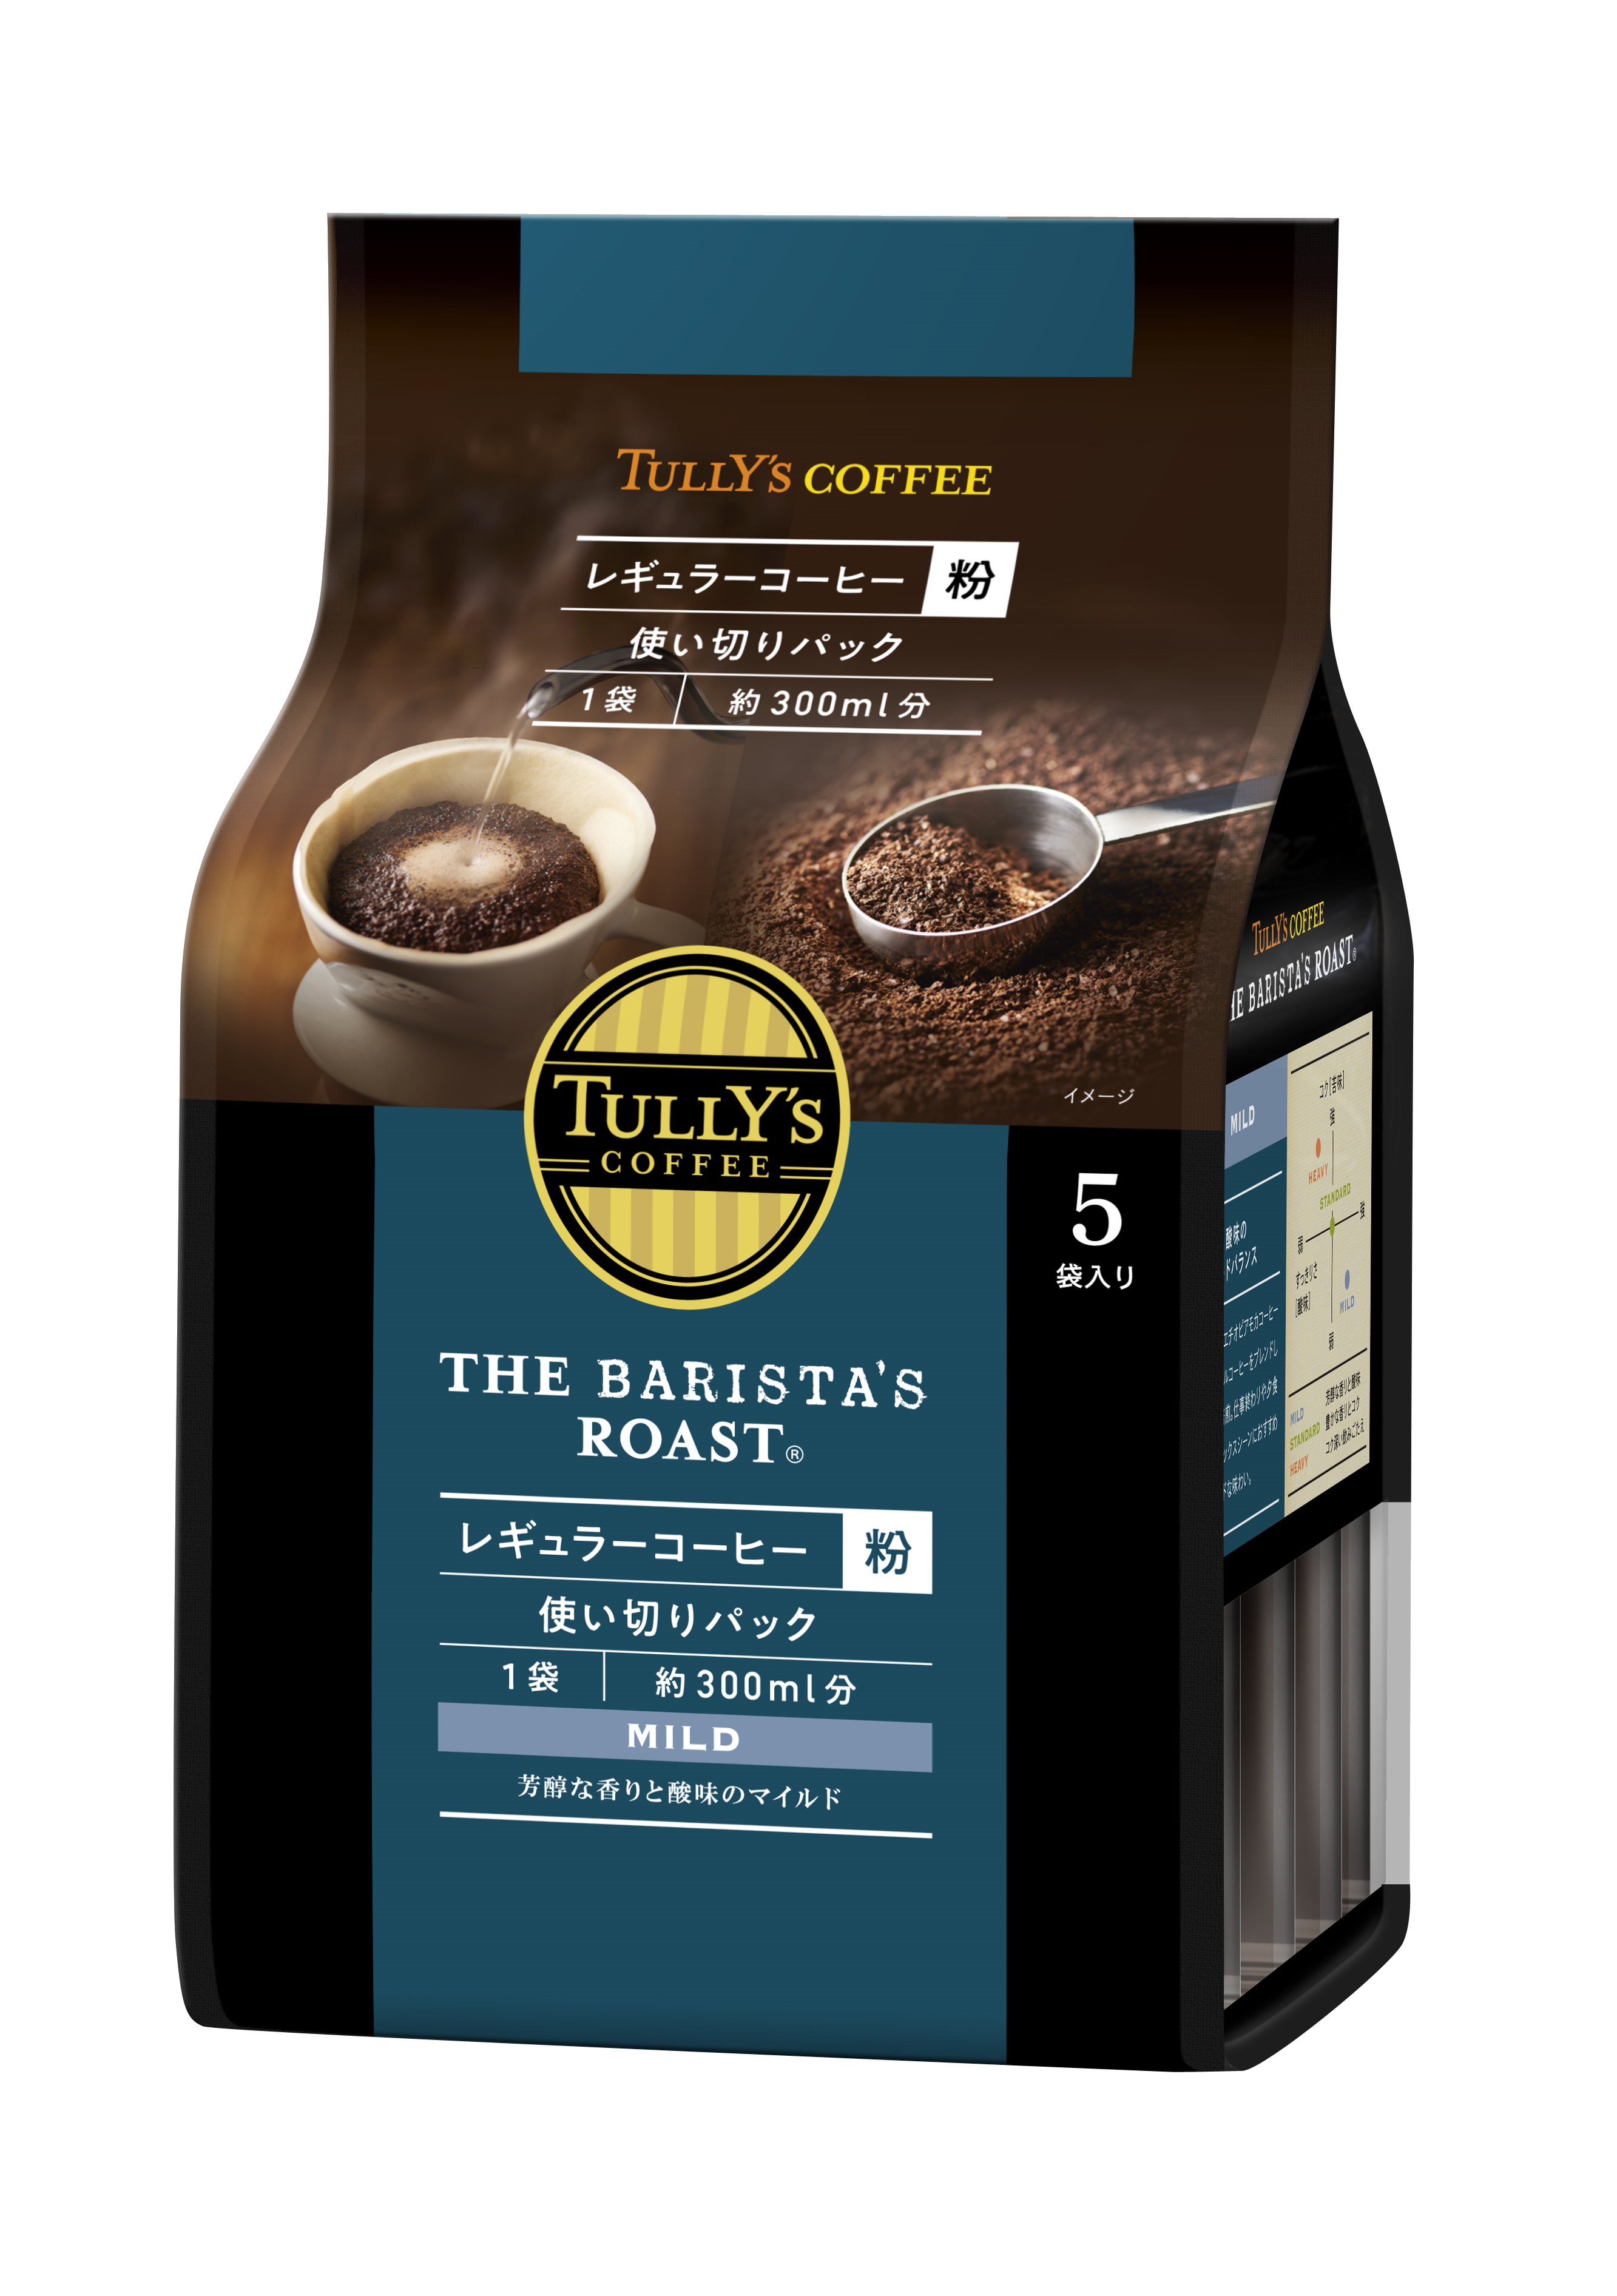 Tully S Coffee The Barista S Roast レギュラーコーヒー 粉 10月4日 月 新発売 伊藤園 企業情報サイト